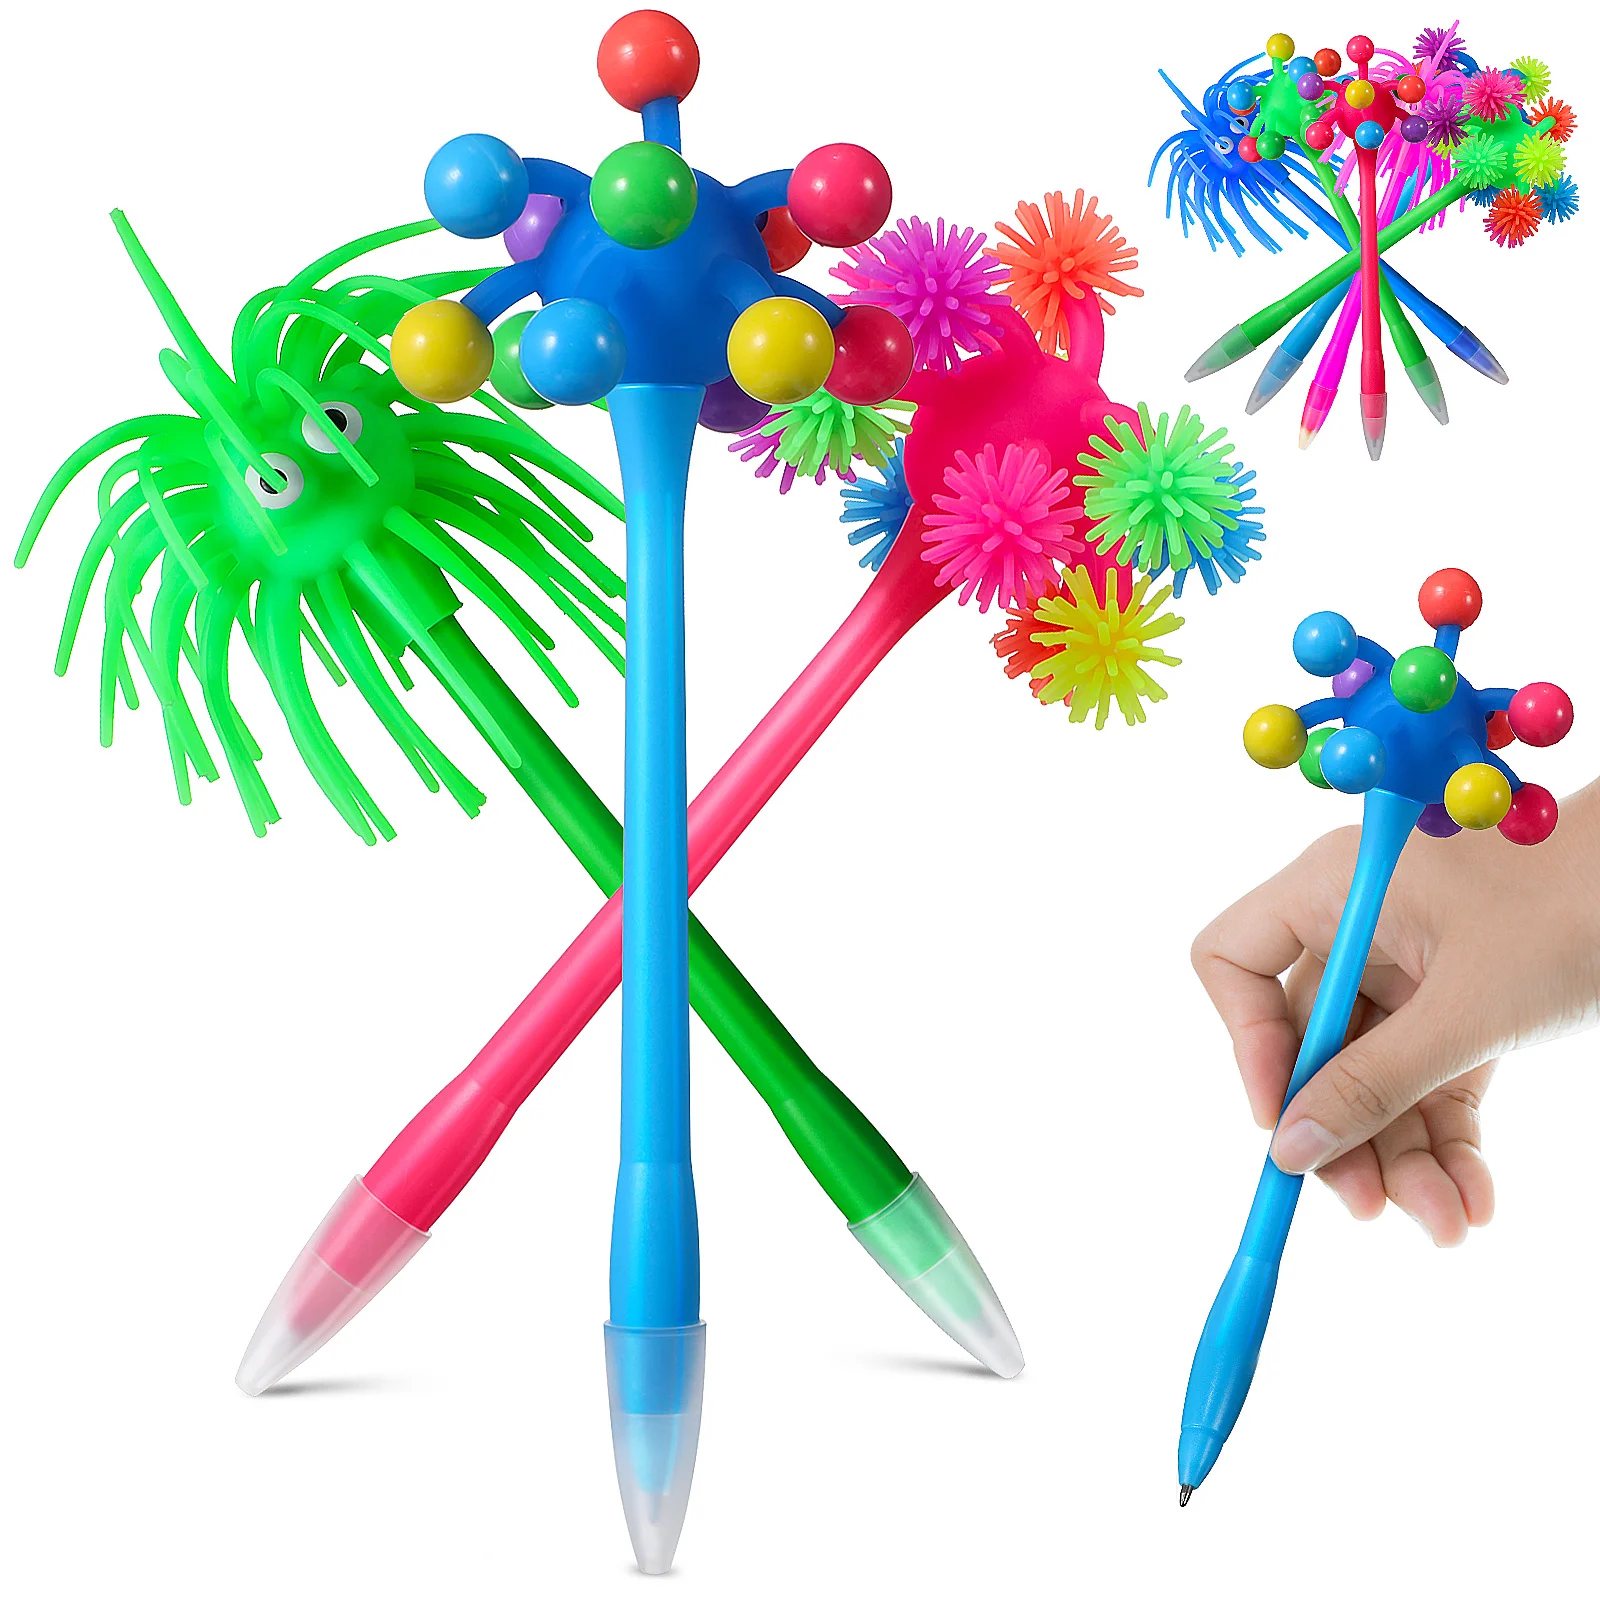 

9 Pcs Toy Aeroplane Office Ballpoint Pens Colorful Plastic Stationery Creative Child Cartoon